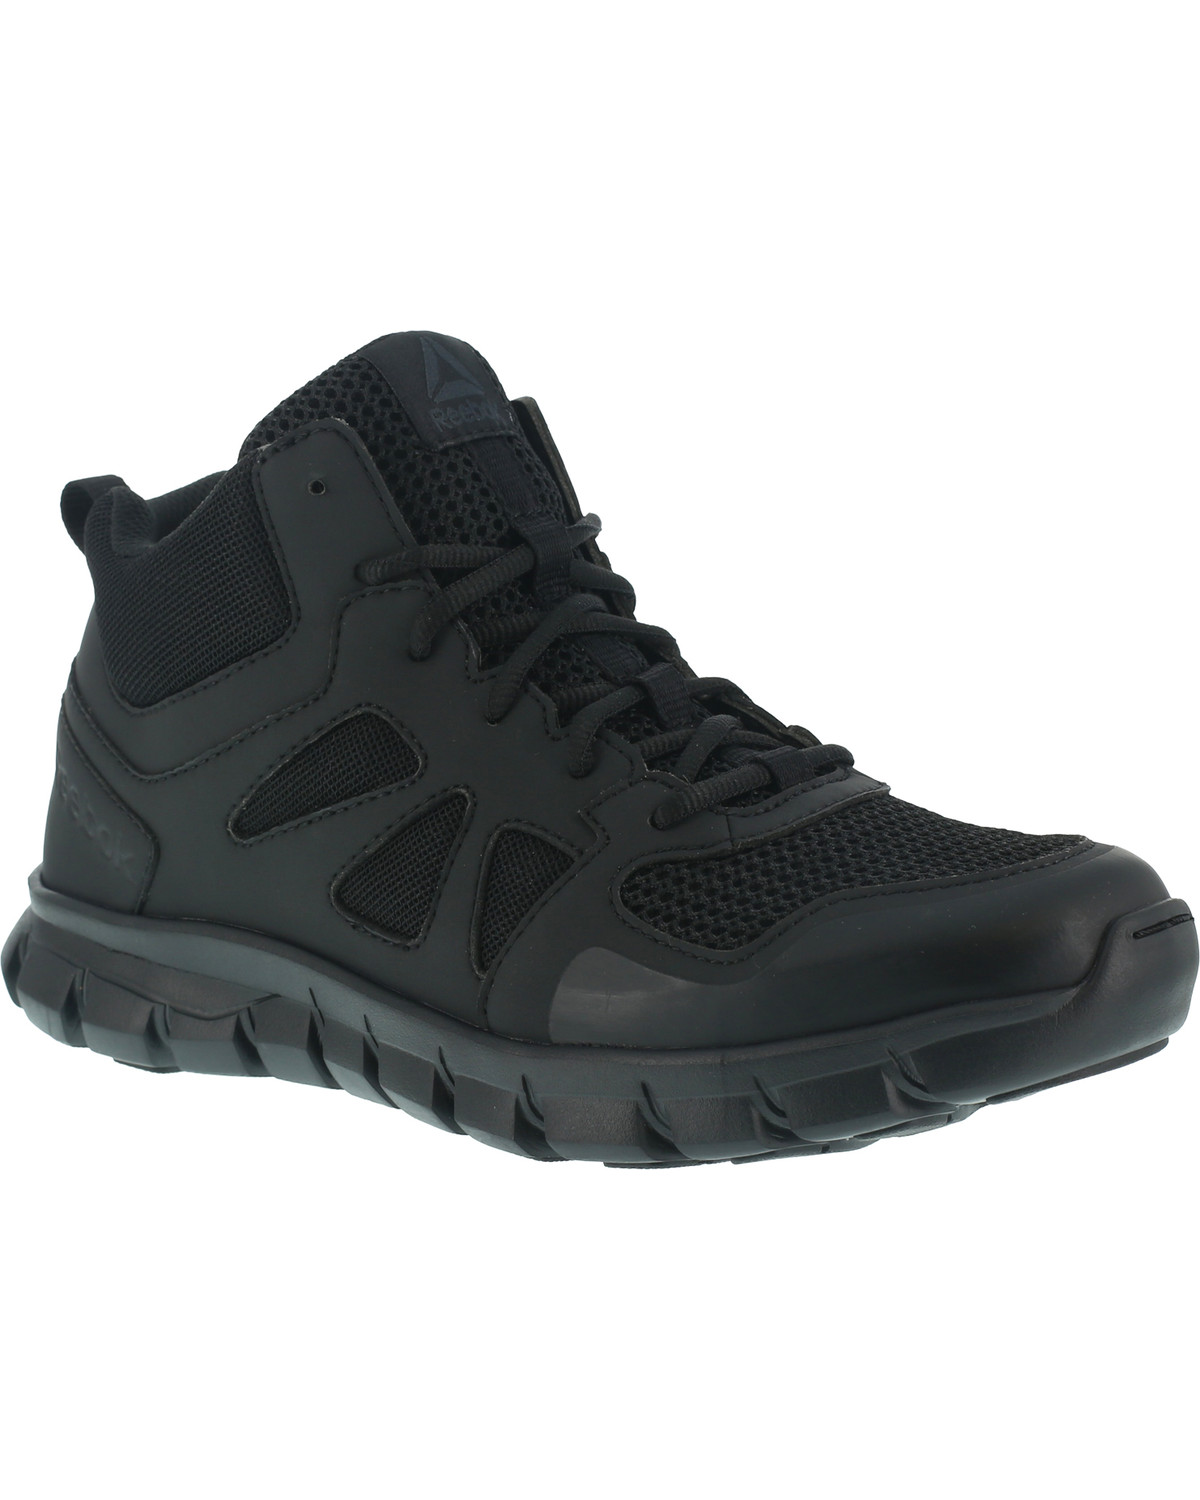 Reebok Men's Sublite Cushion Tactical Mid Shoes - Soft Toe